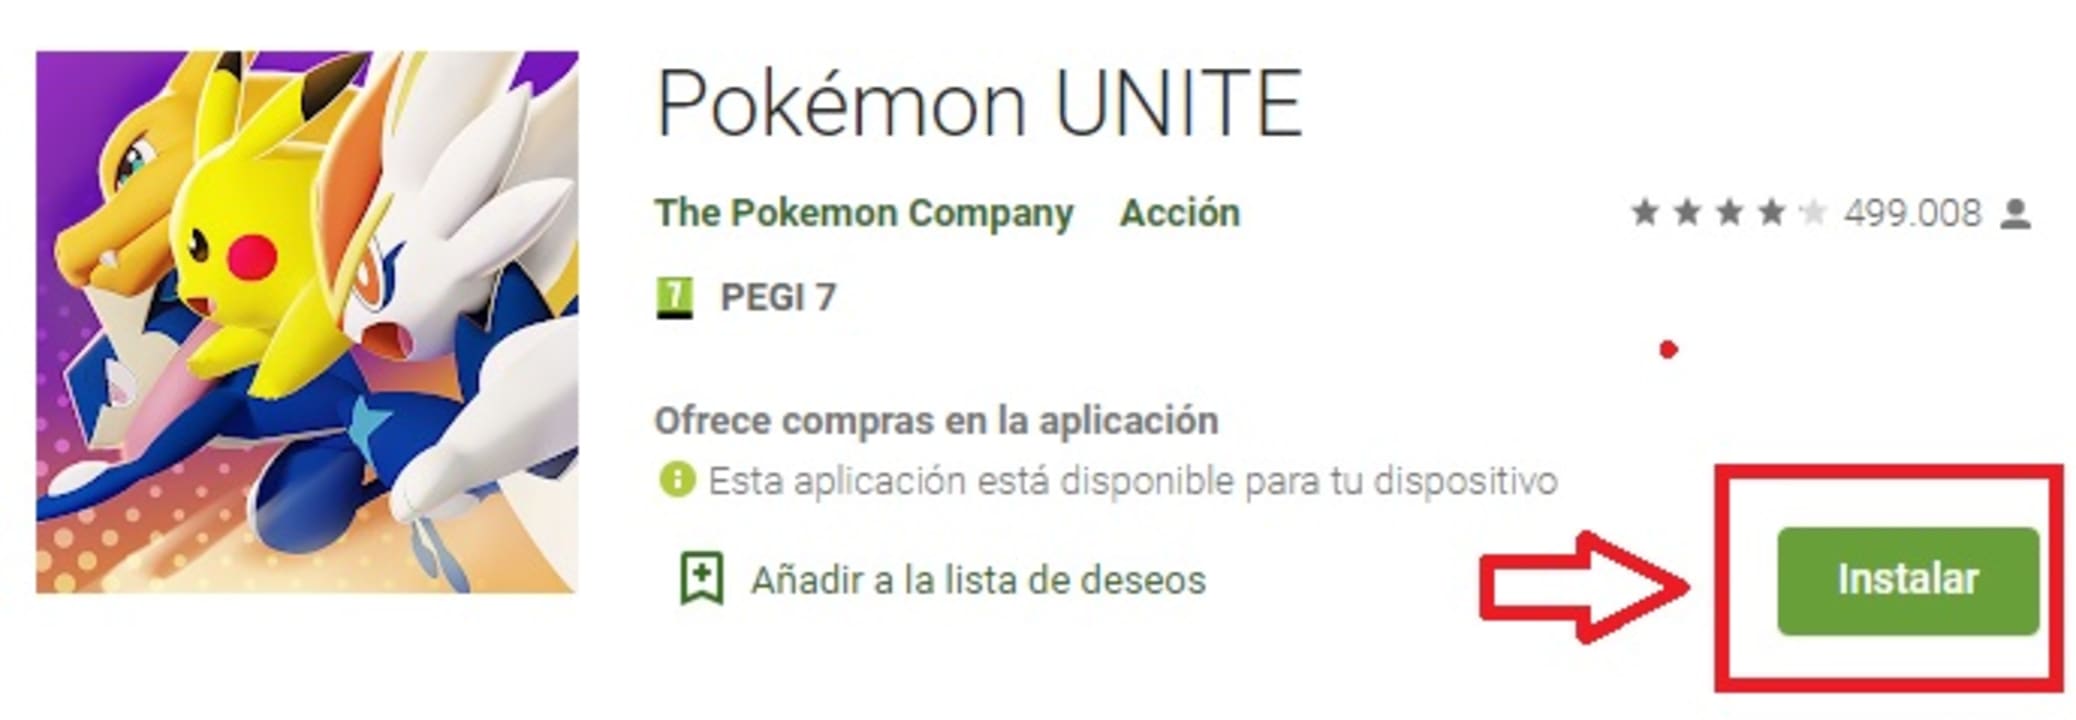 Página de descarga de Pokémon UNITE